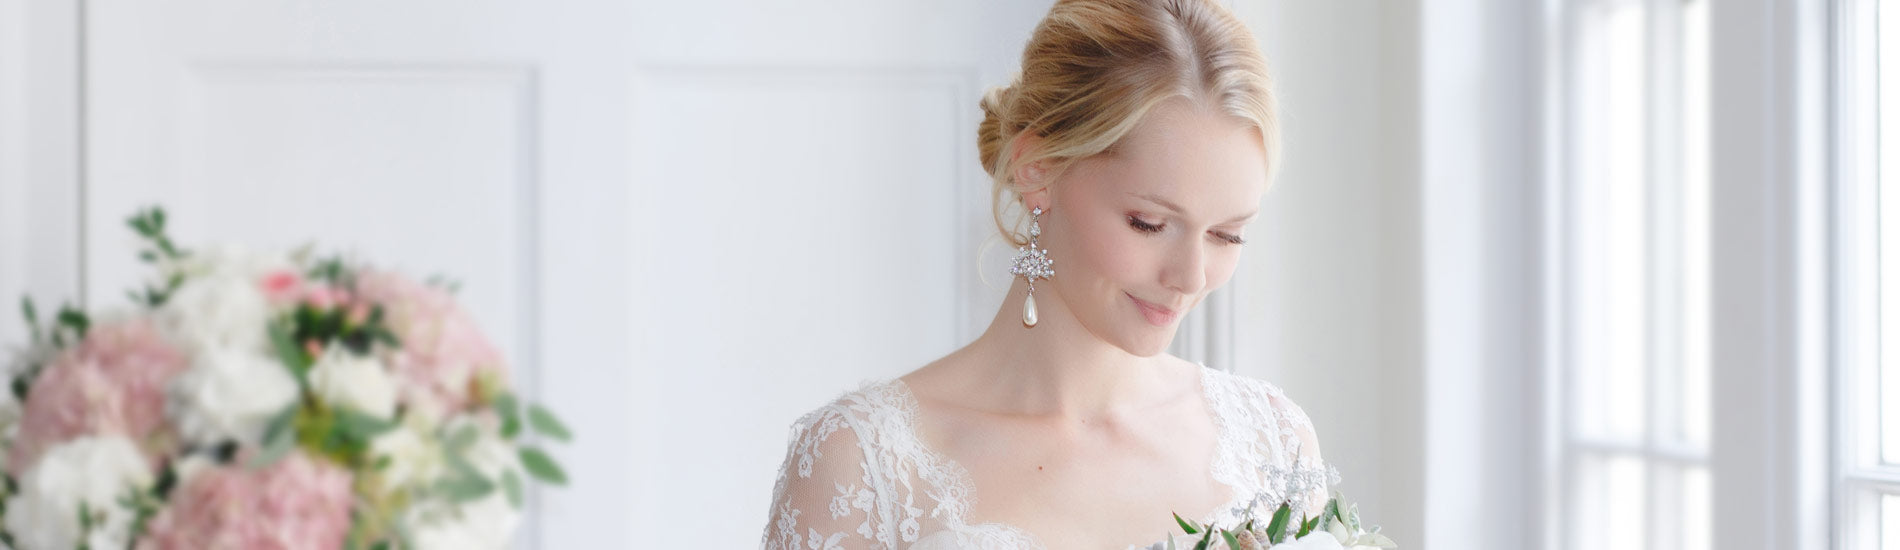 Wedding earrings for brides